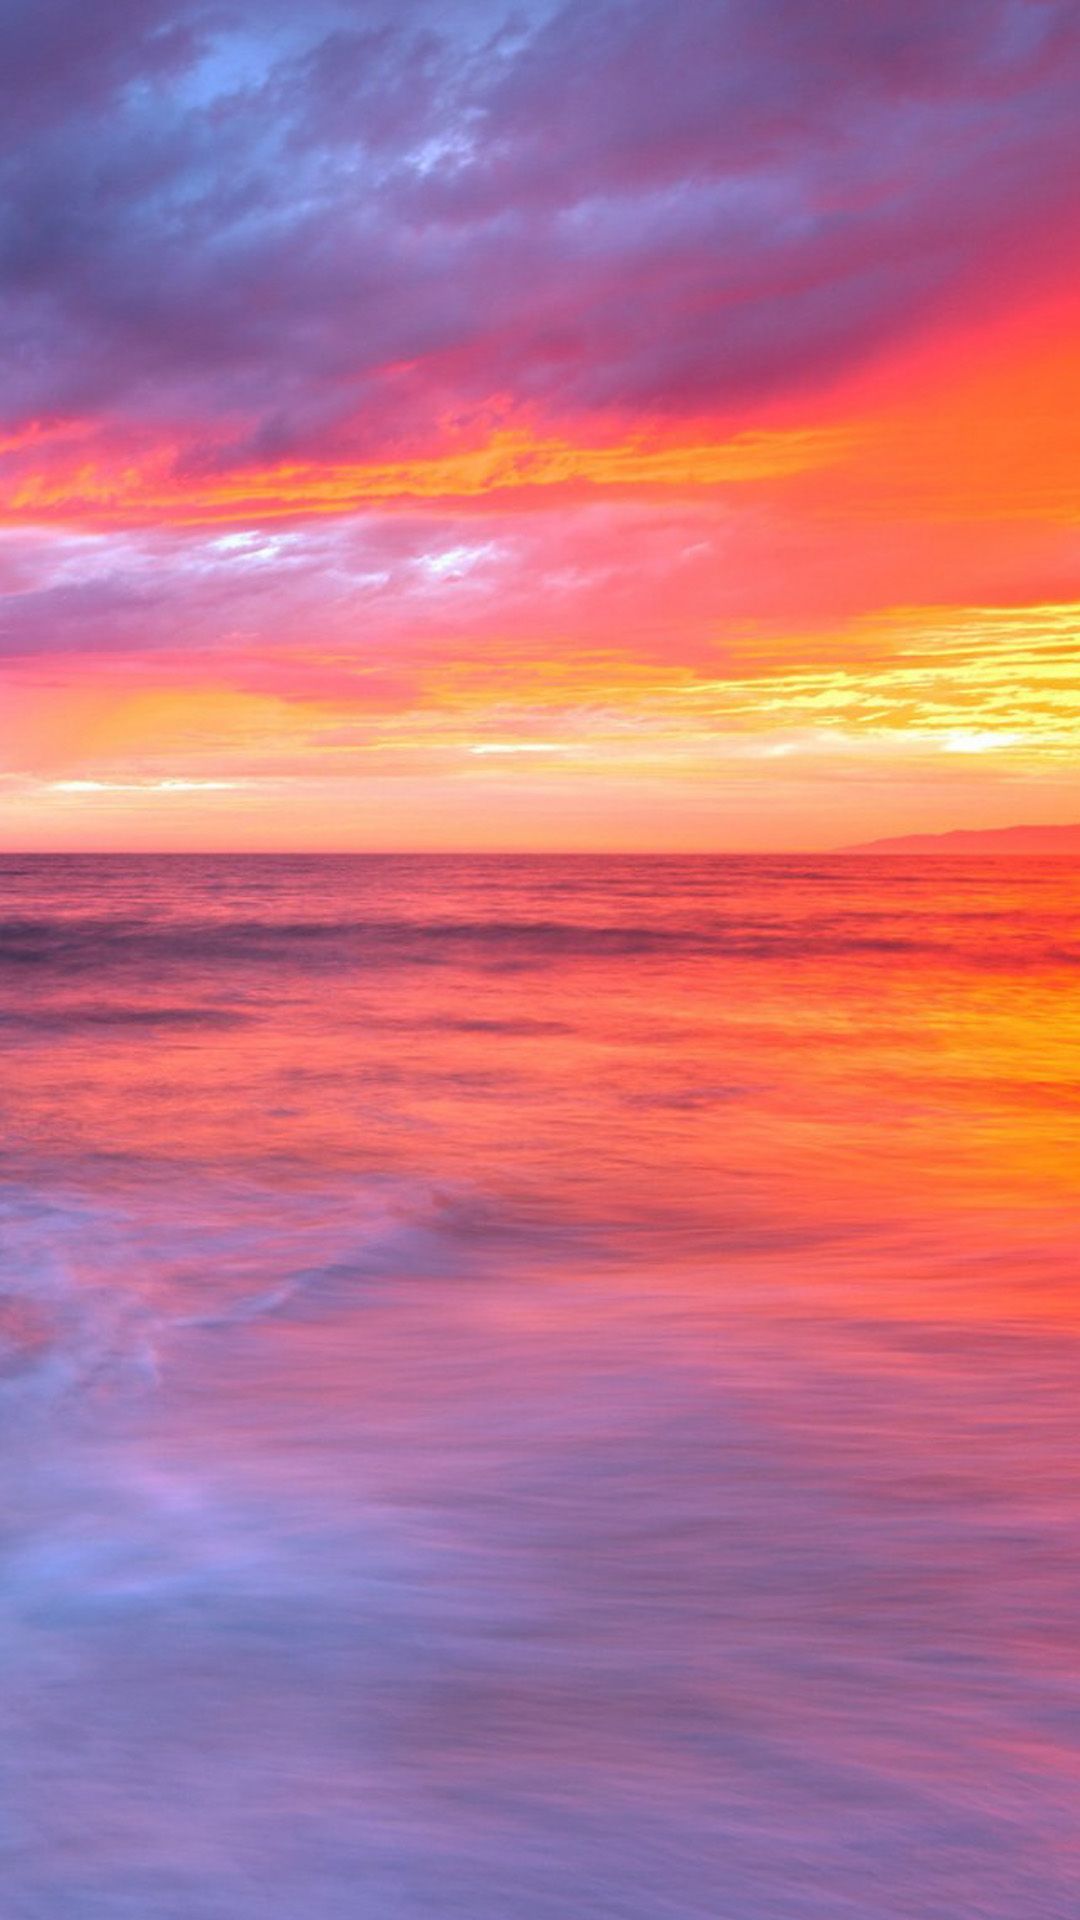 iPhone Wallpaper. Sky, Afterglow, Horizon, Red sky at morning, Sunset, Sea